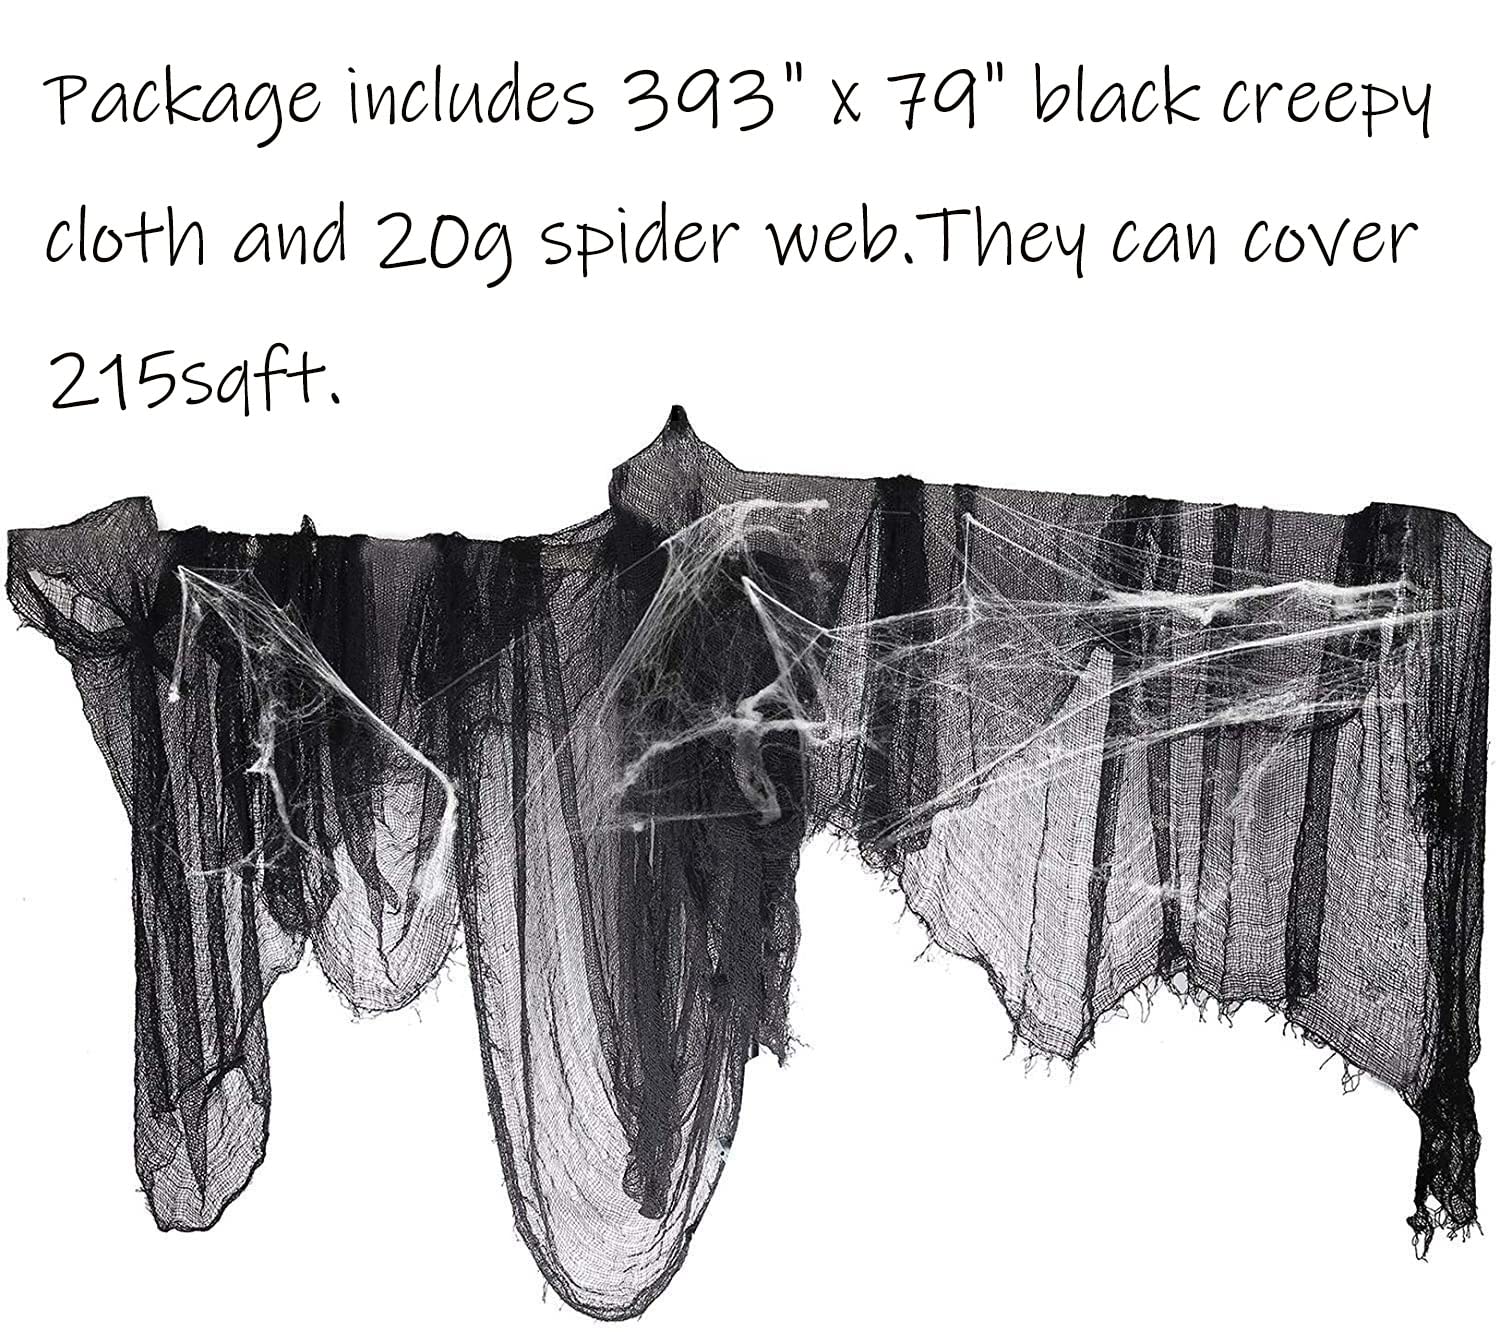 Moon Boat 393" x 79" Black Creepy Cloth + Spider Web - Halloween Decorations Haunted House Indoor Outdoor Party Decor